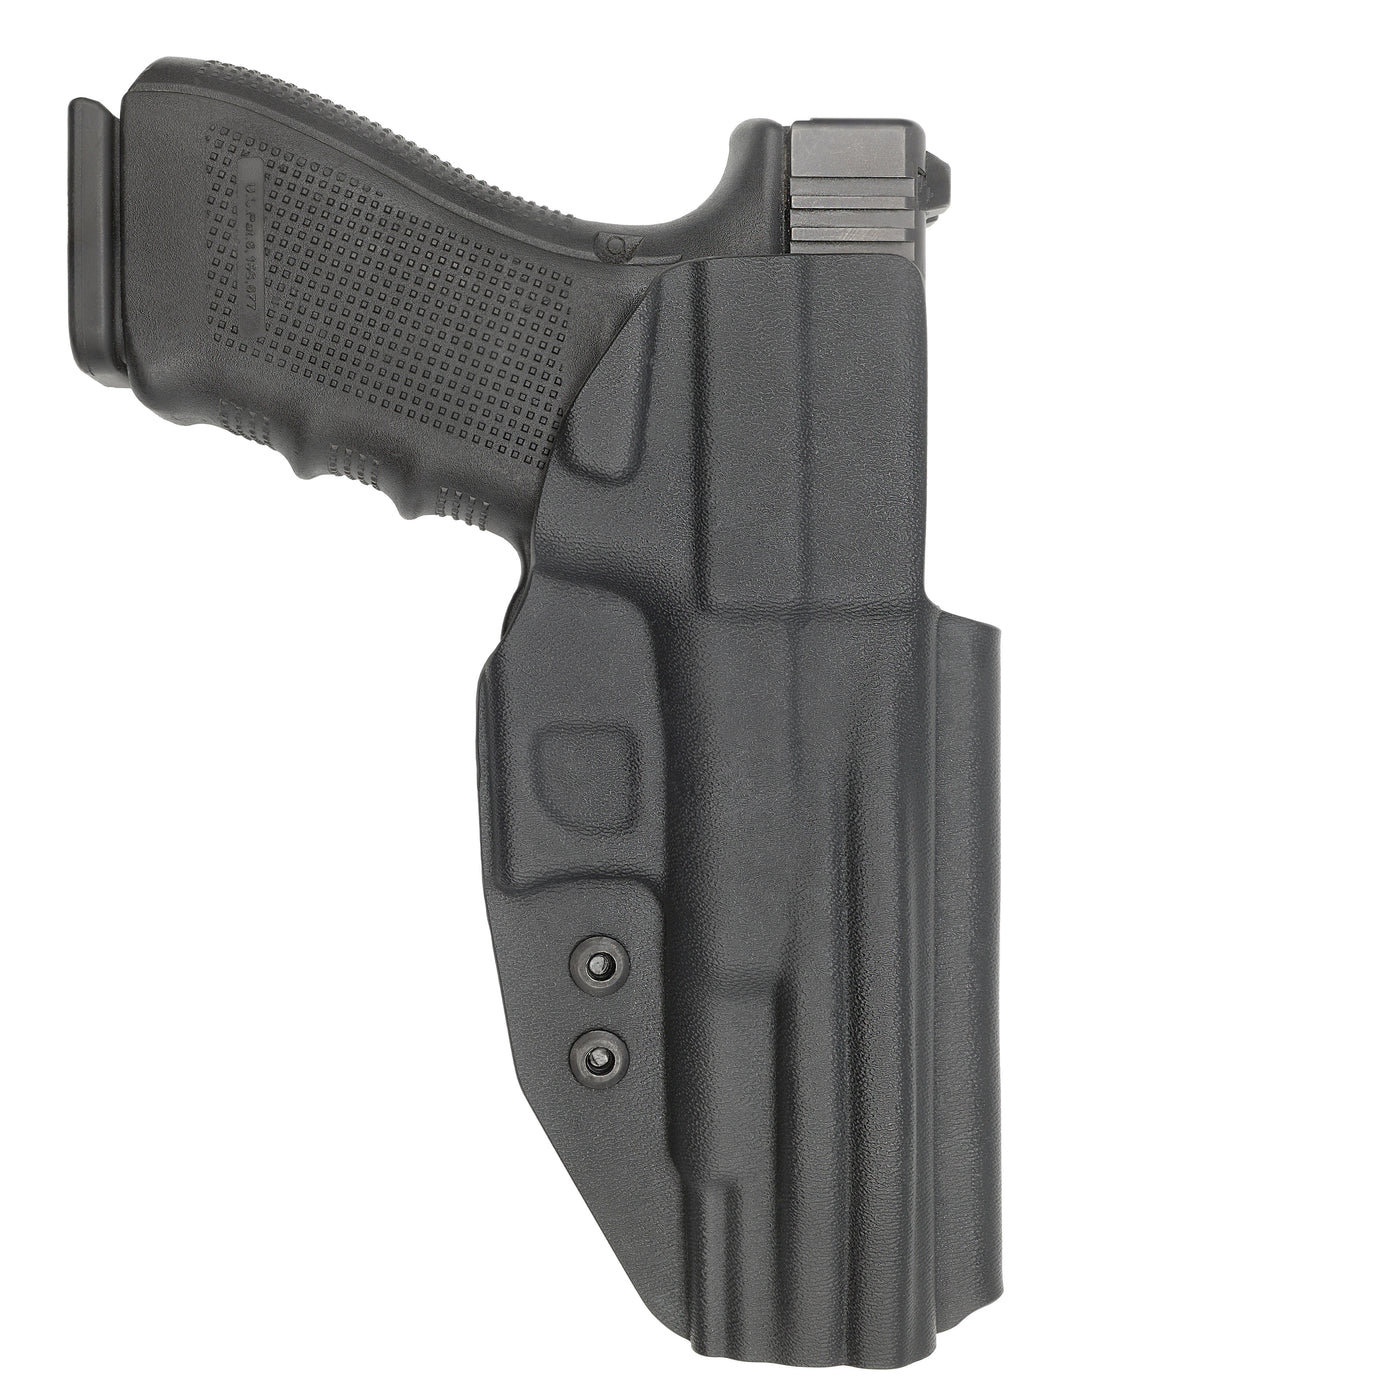 C&G Holsters Quickship IWB Covert Glock 20/21 in holstered position LEFT HAND back view